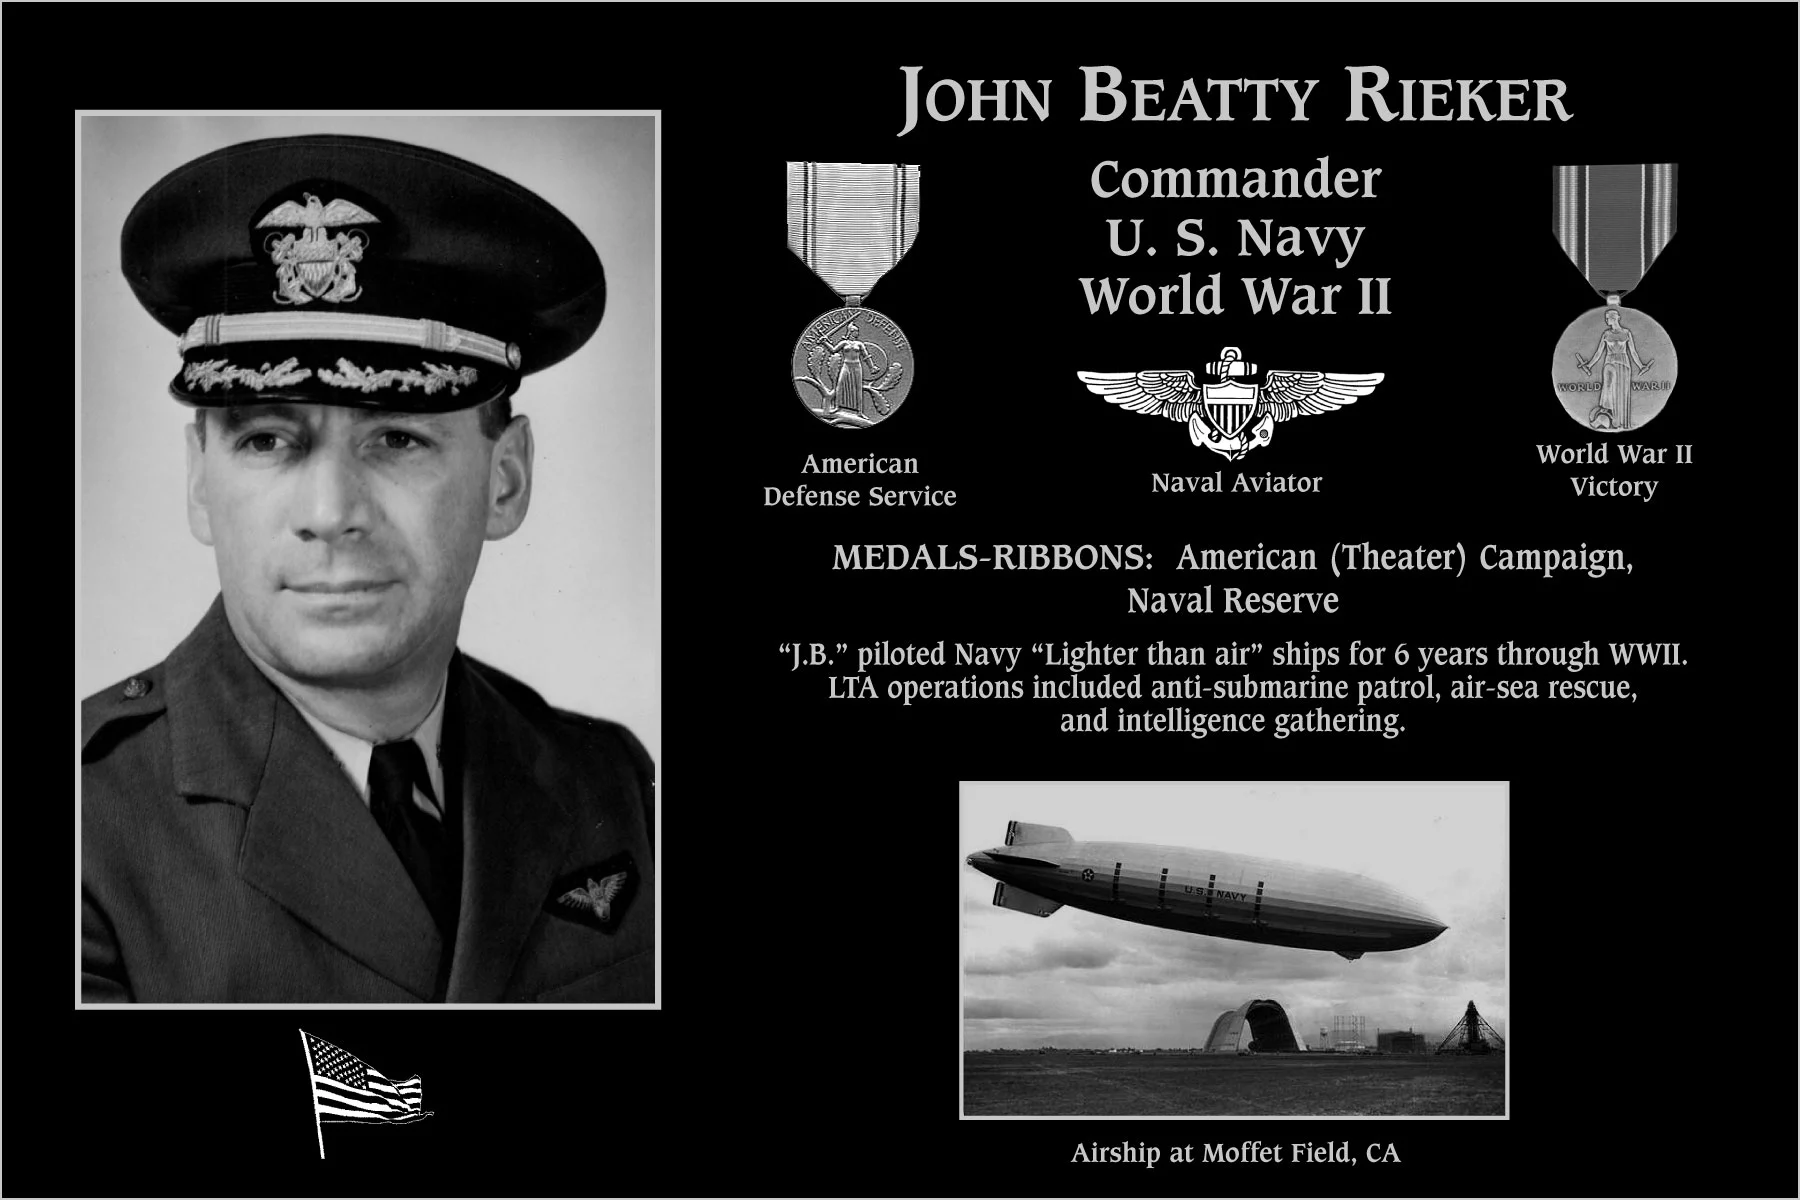 John Beatty “J.B.” Rieker